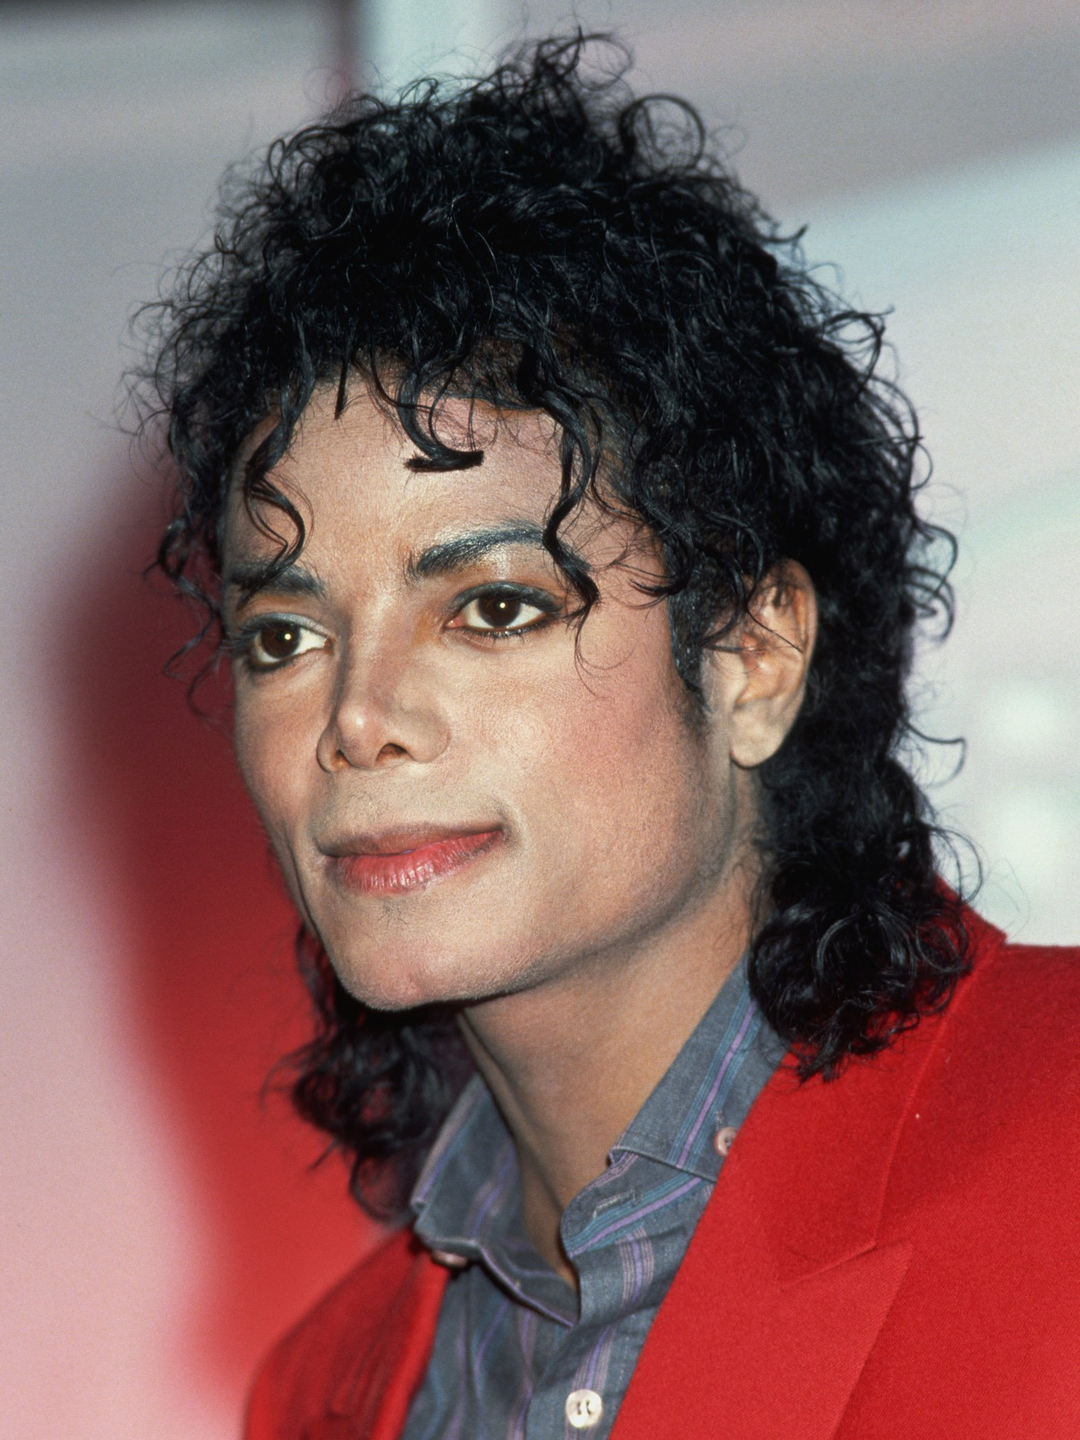 Michael Jackson early career